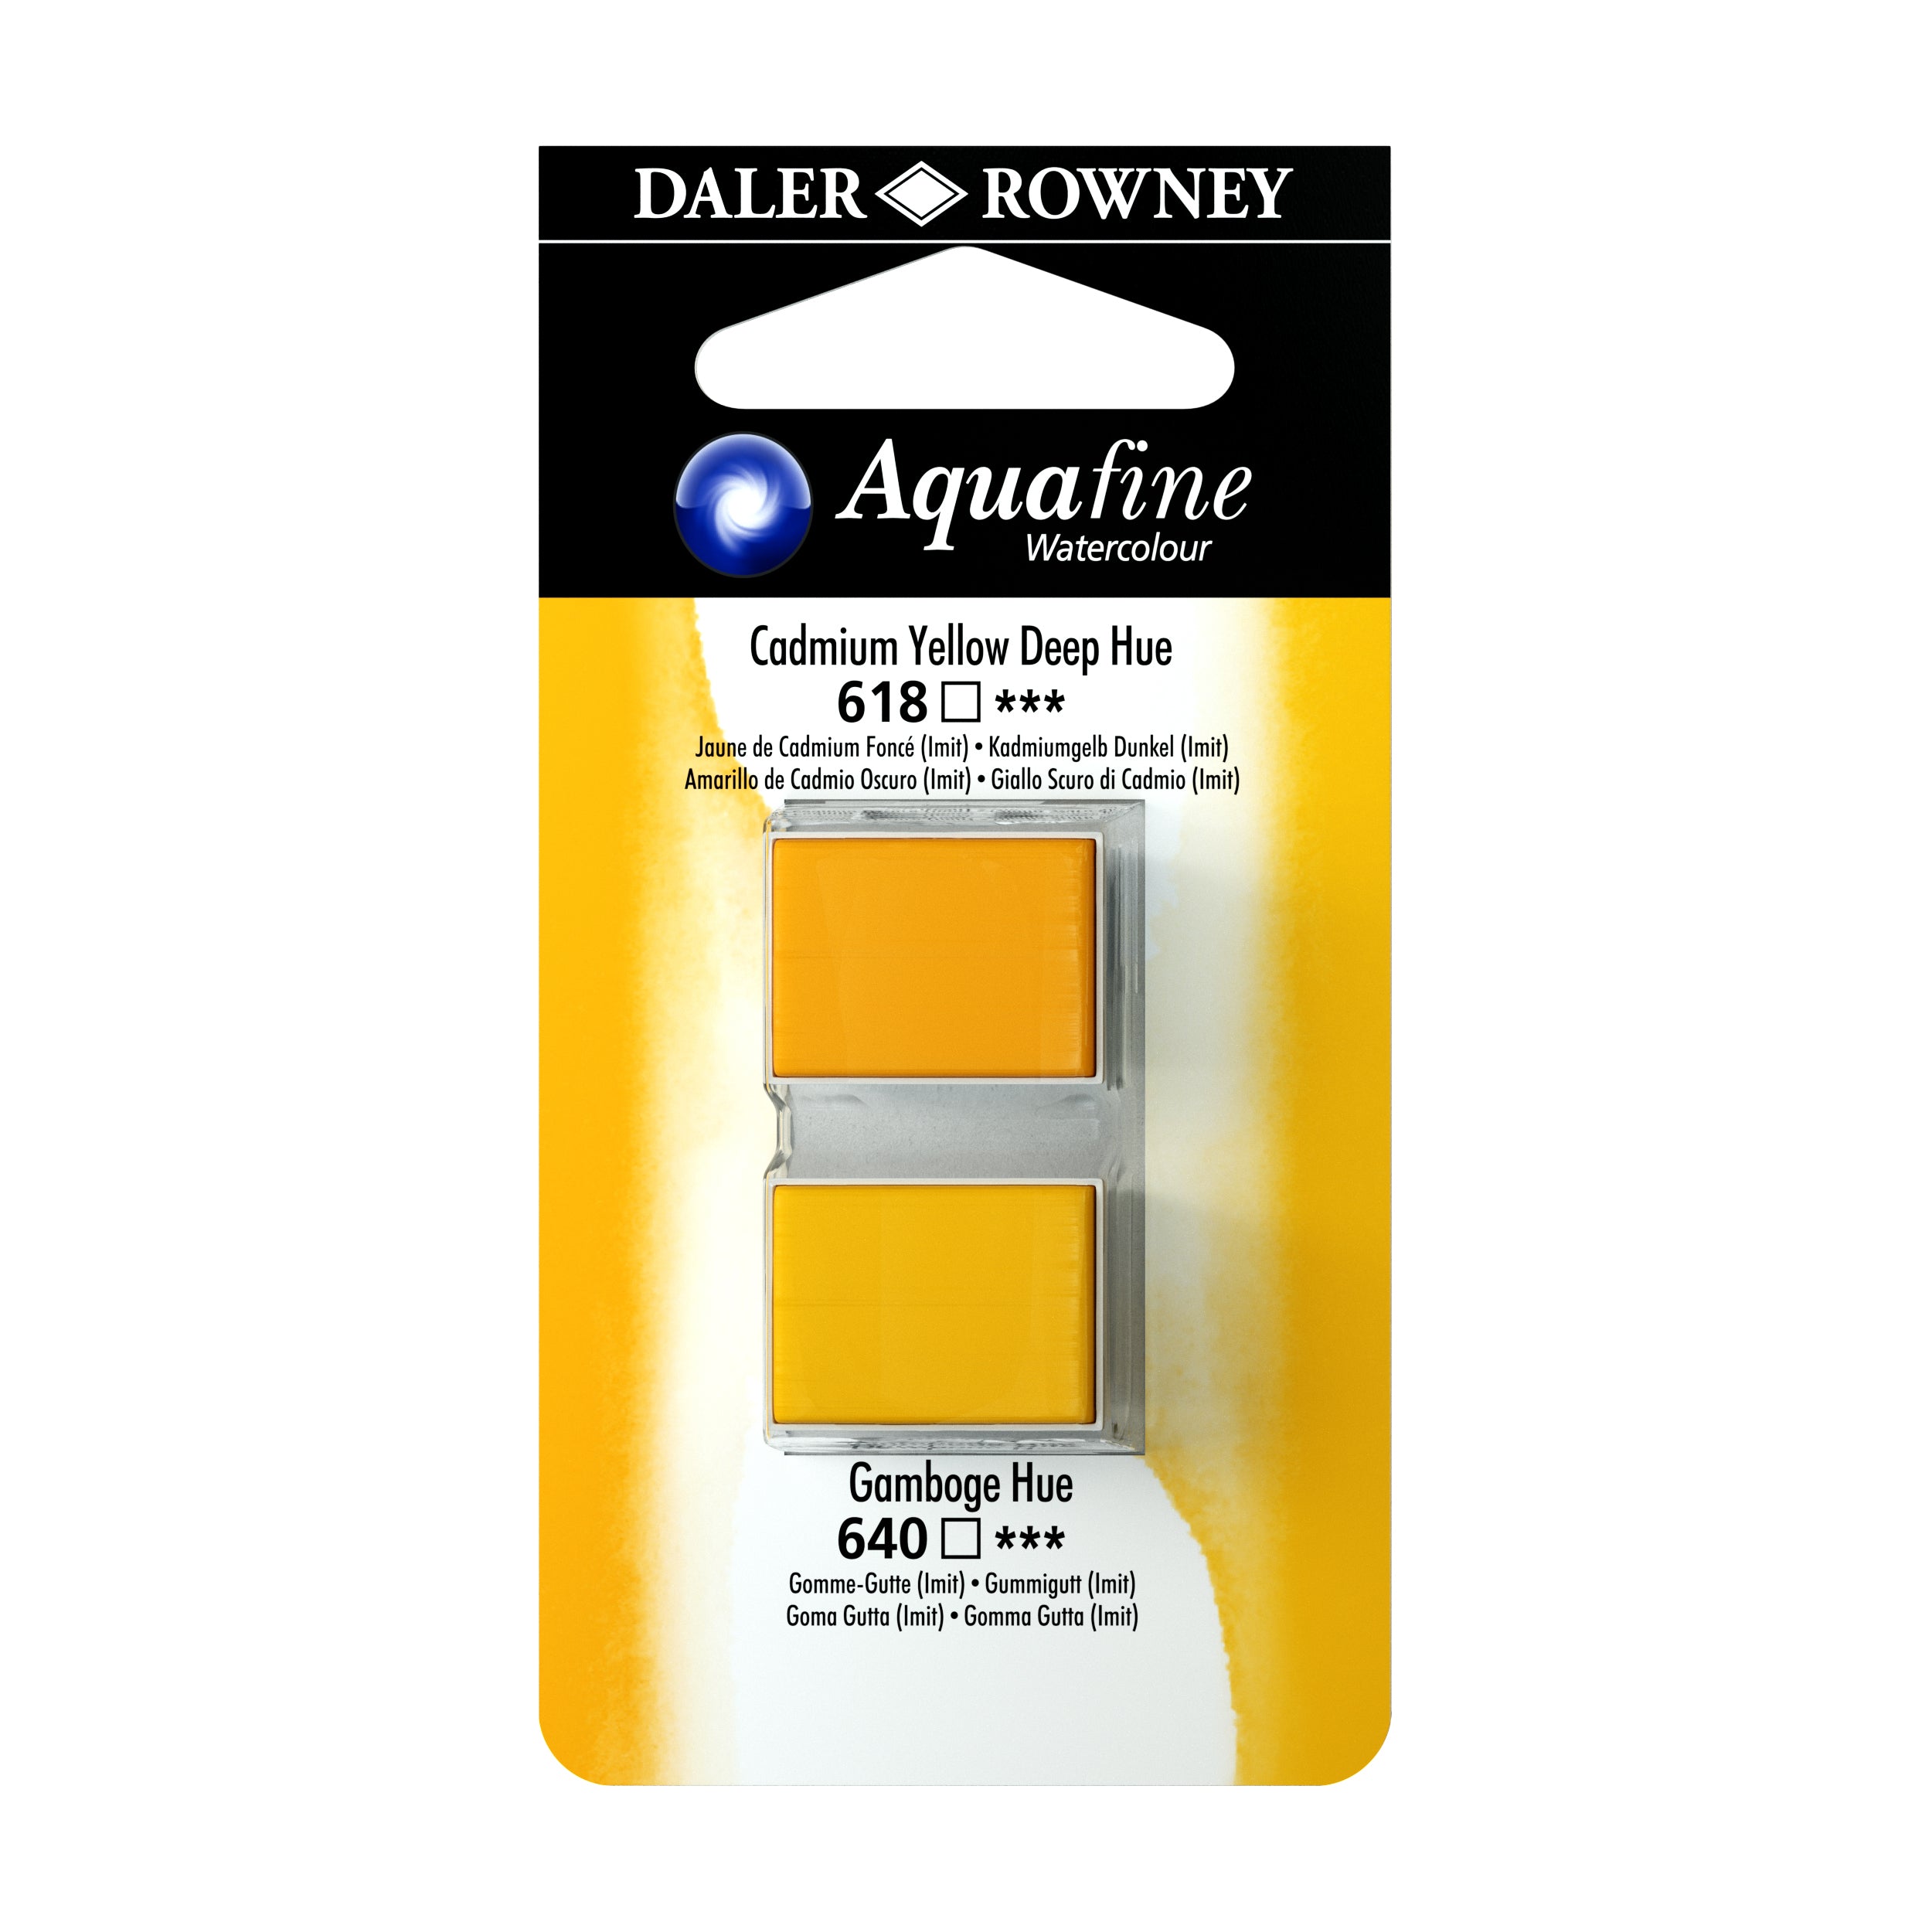 Daler-Rowney Aquafine Watercolour, Half Pan Twin Set Naples Yellow & Burnt Umber